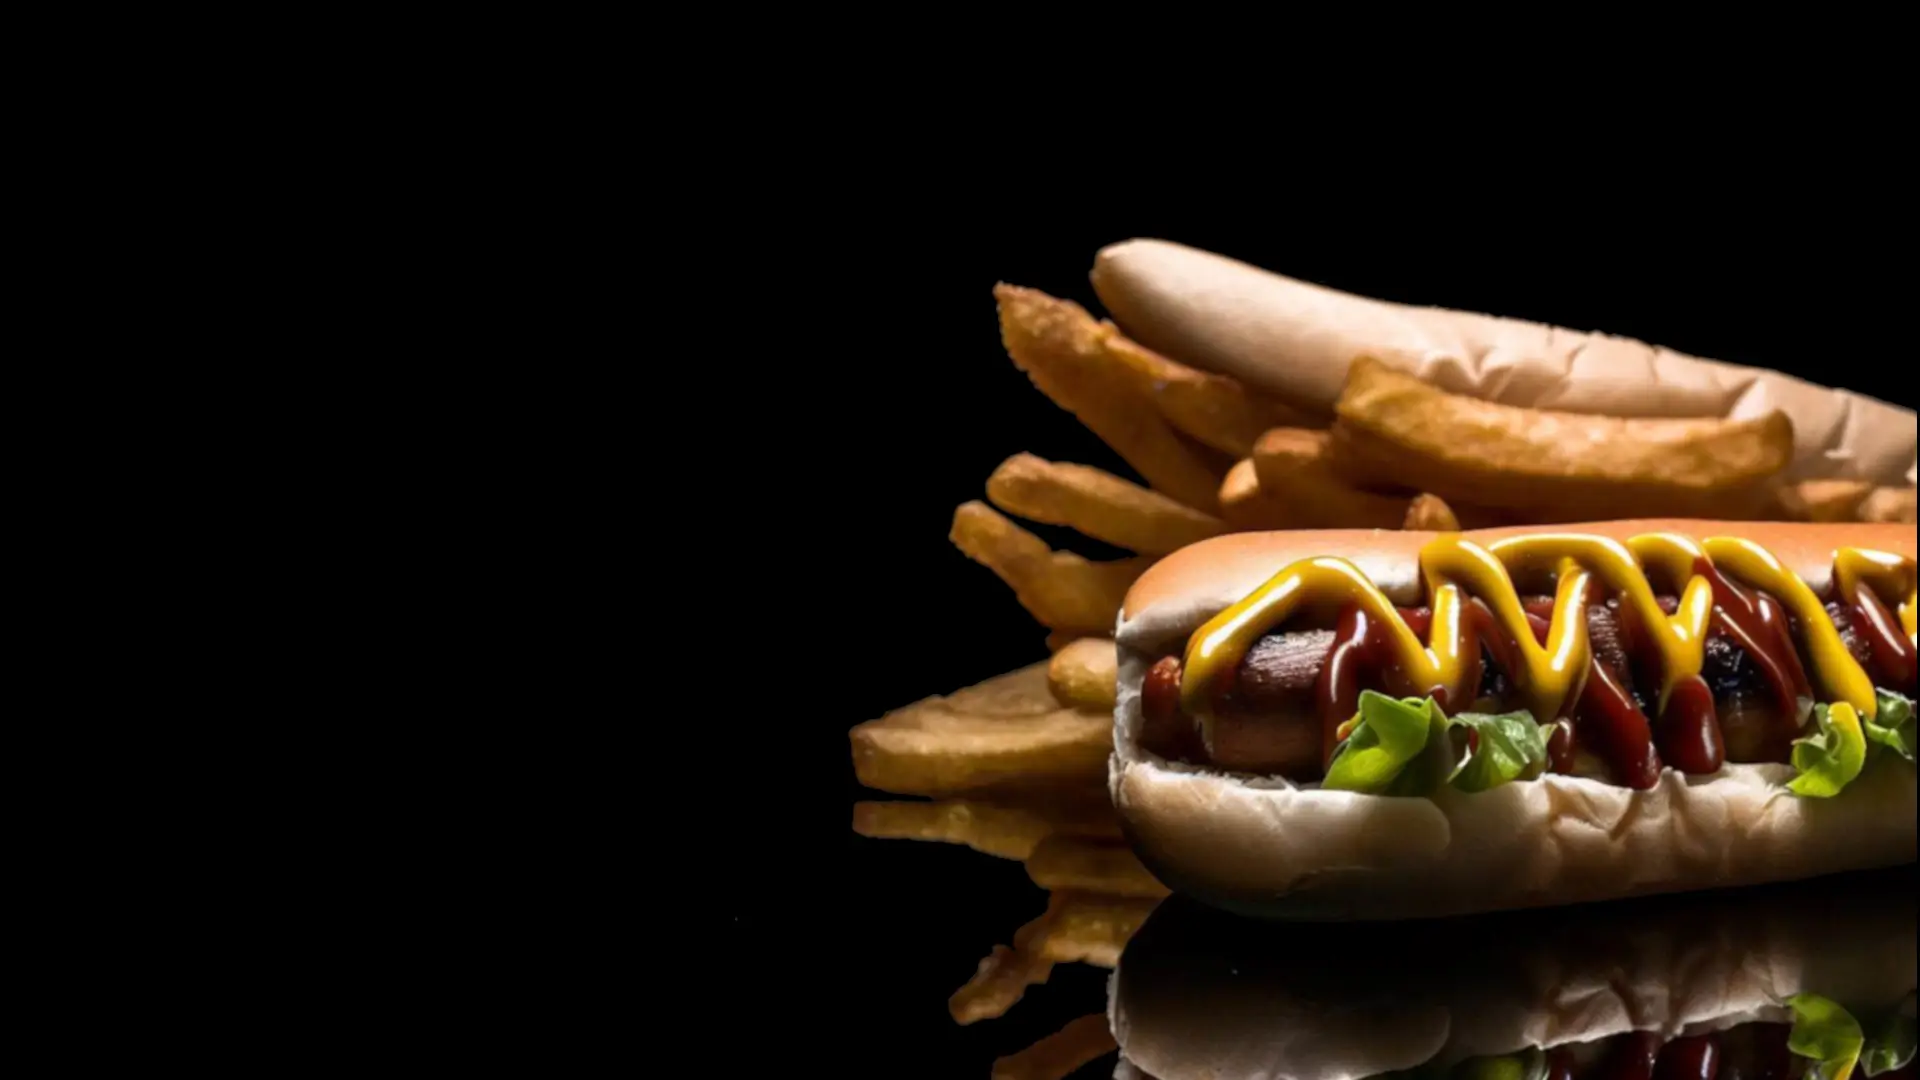 Hotdog with fries